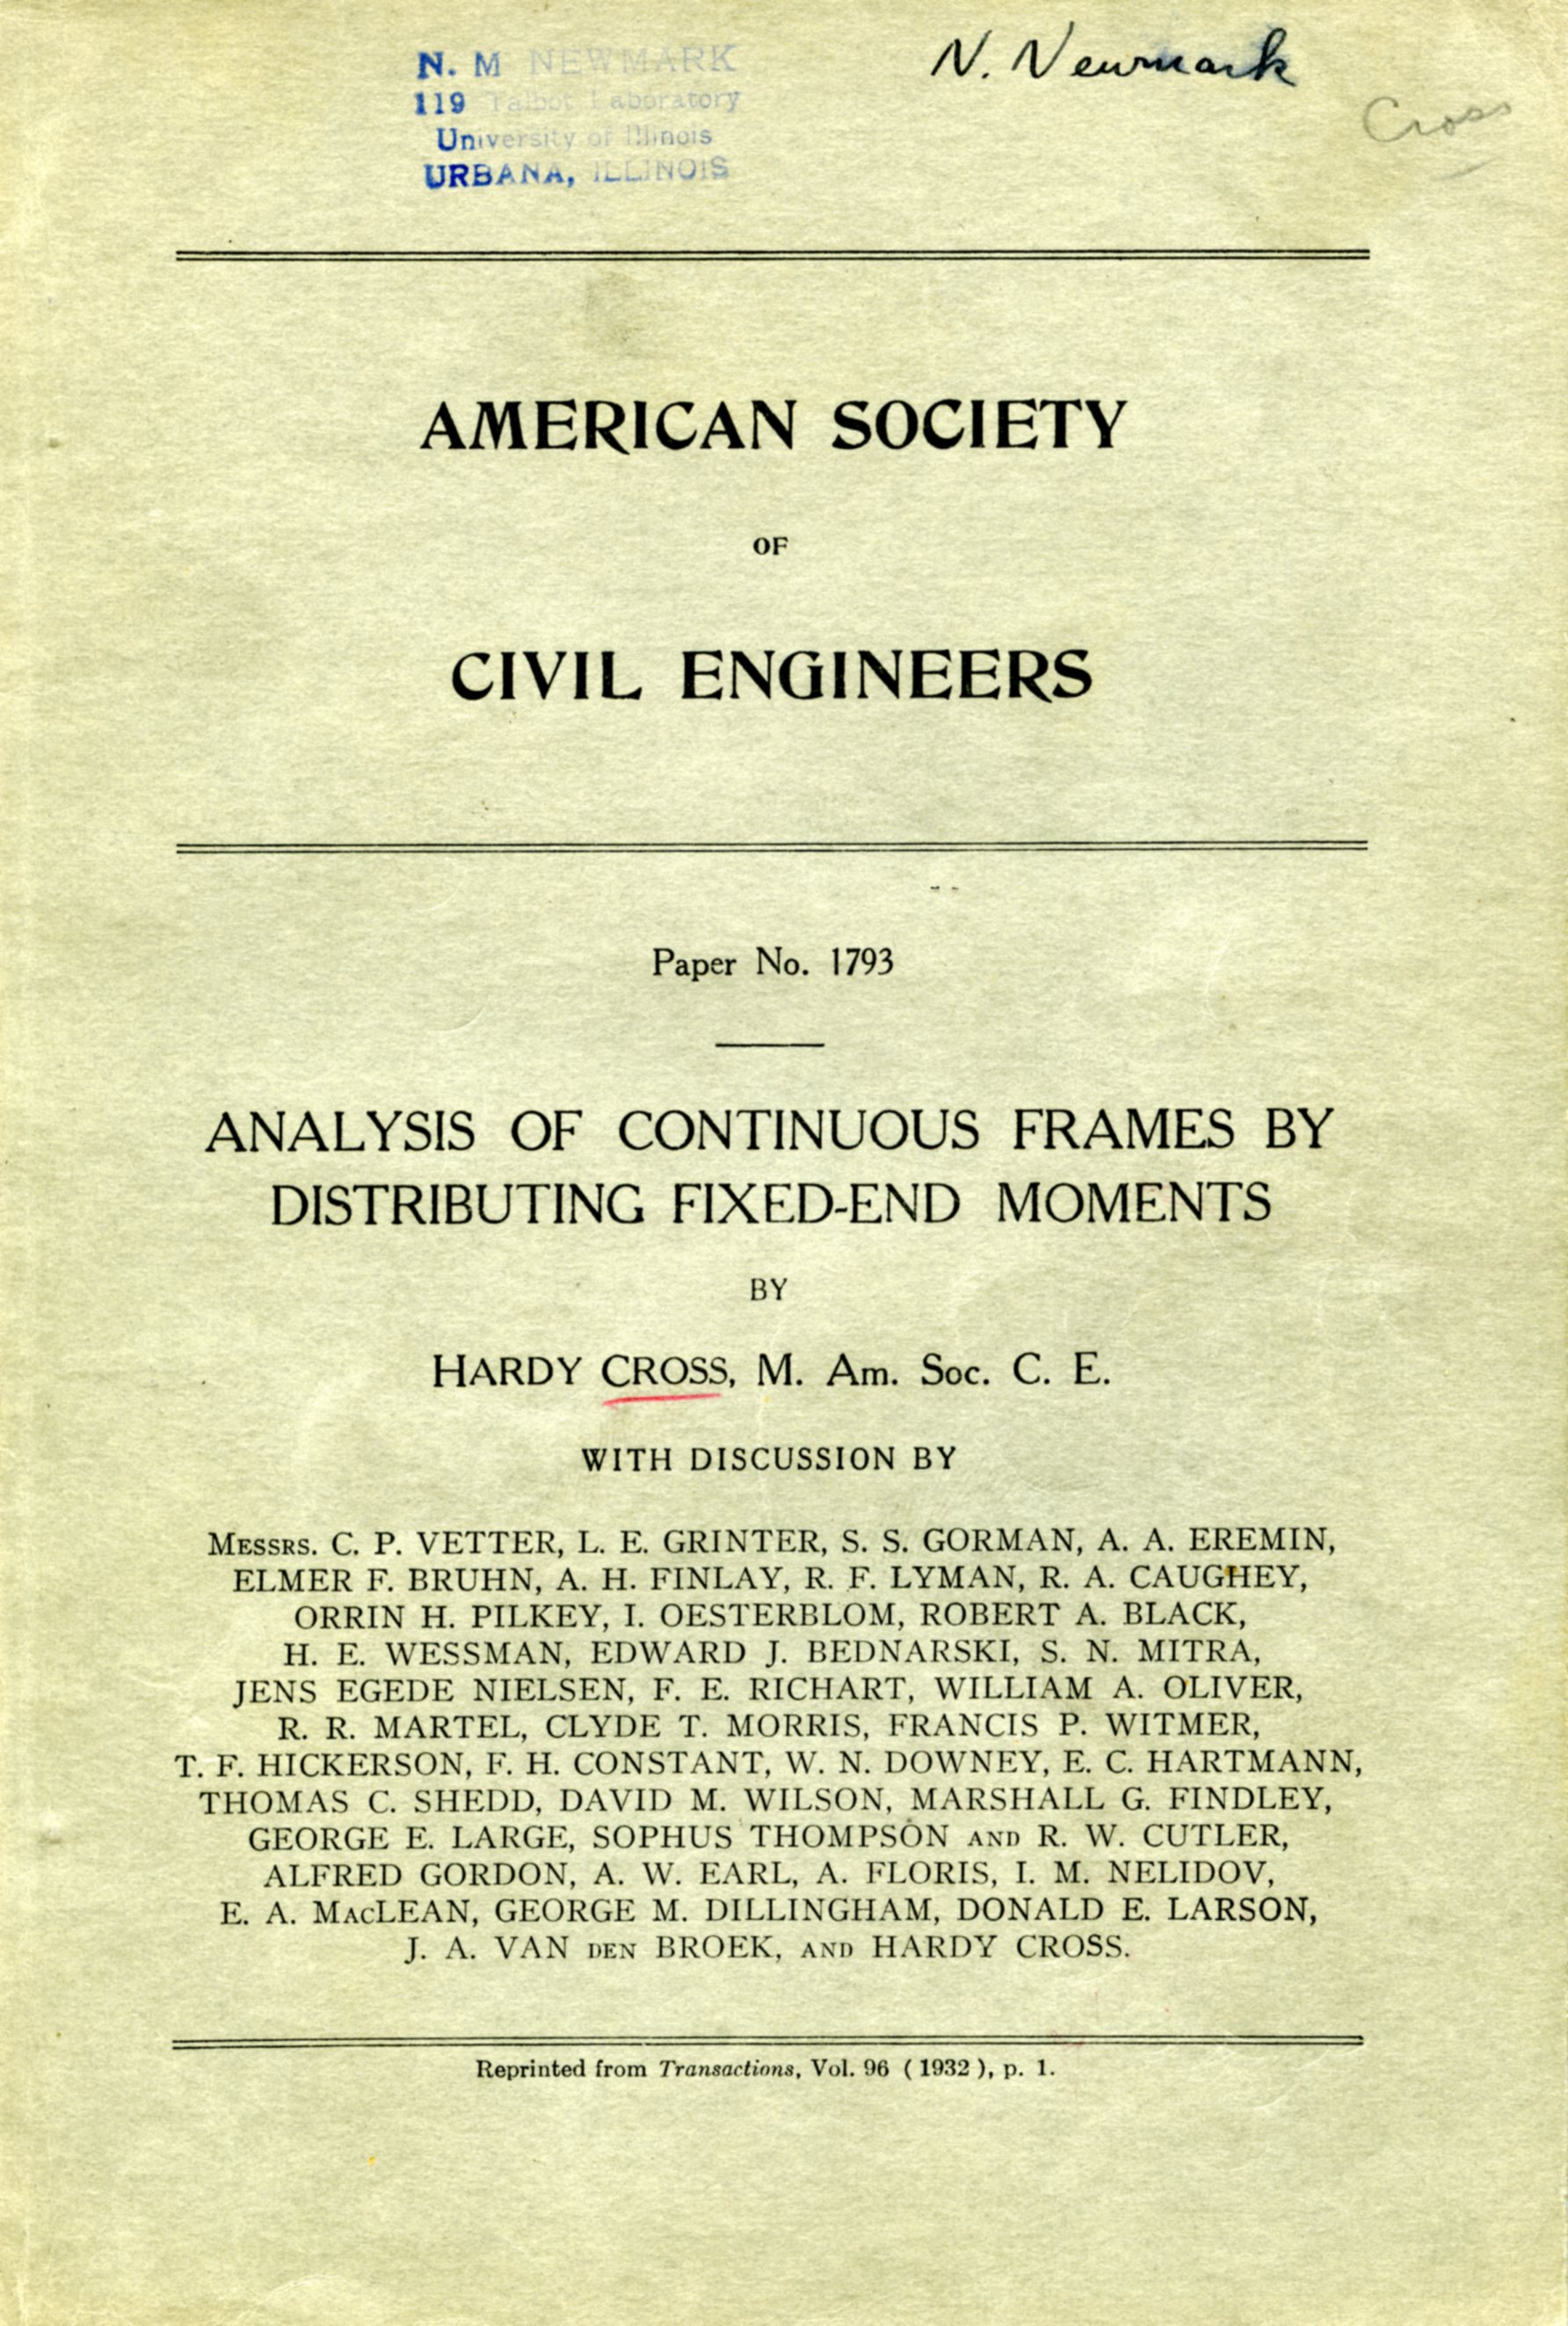 Copy of The Hardy Cross Method, University of Illinois Archives